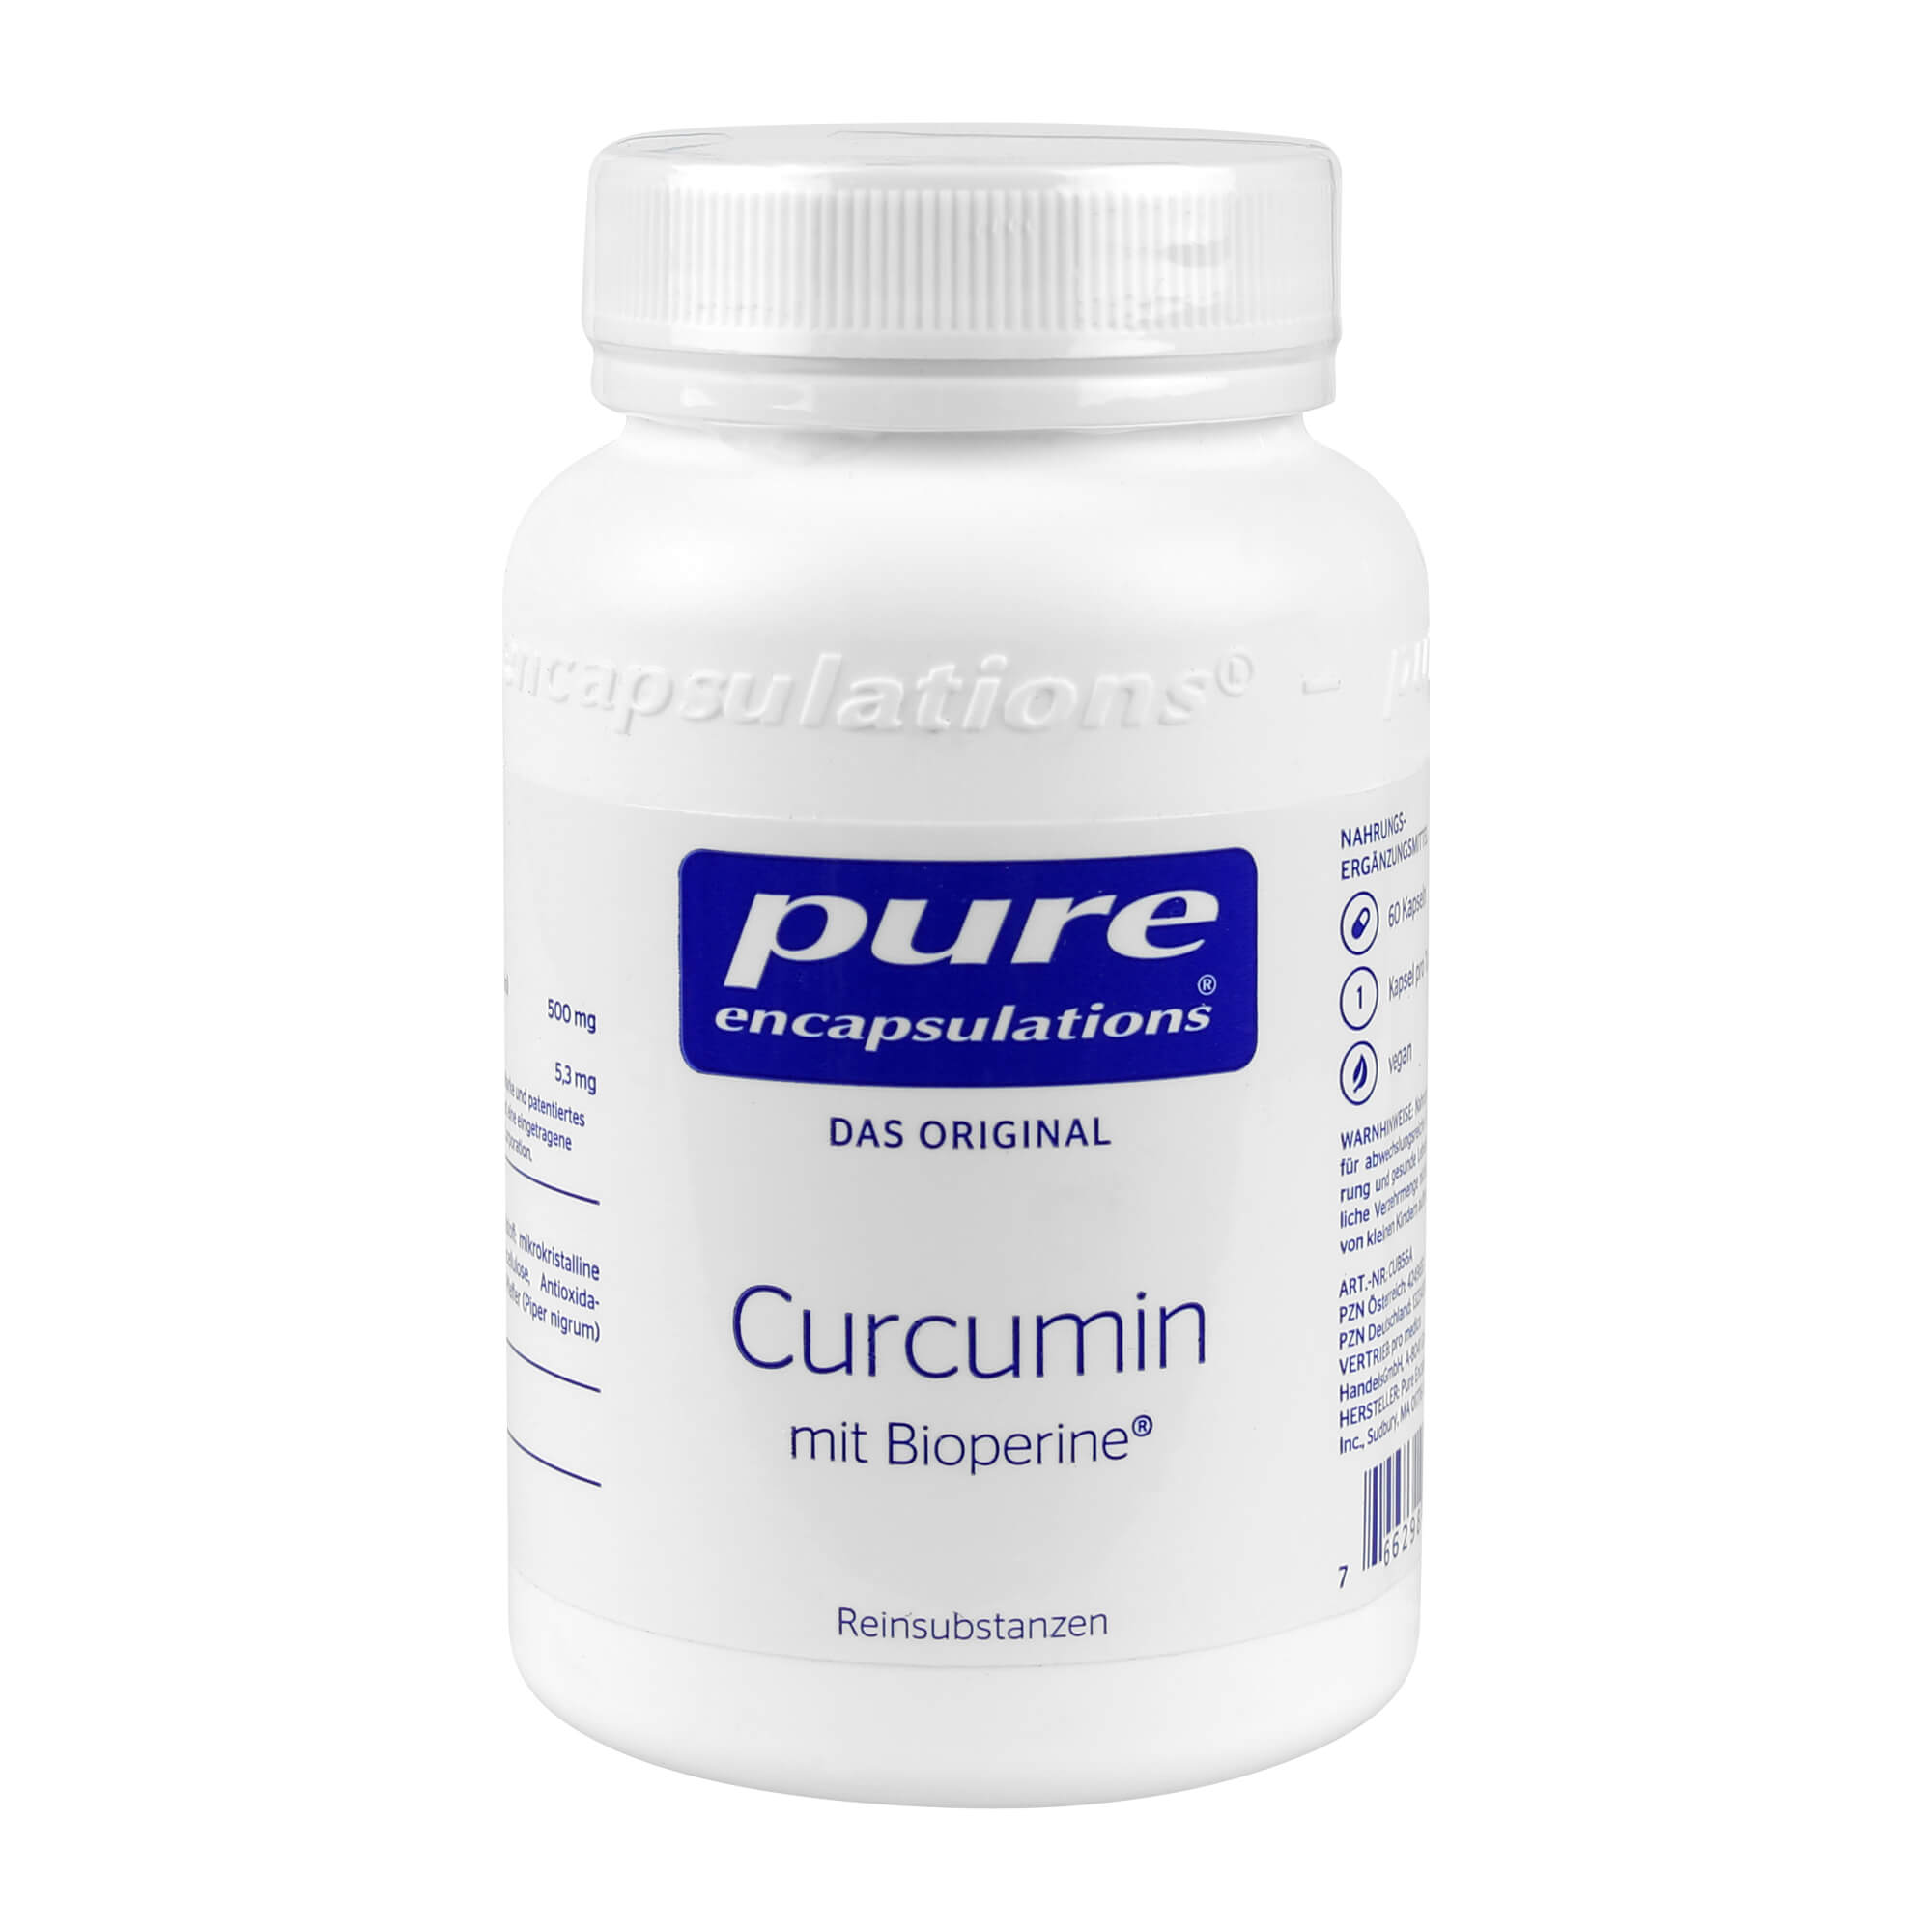 Pure encapsulations Curcumin mit Bioperine Kapseln